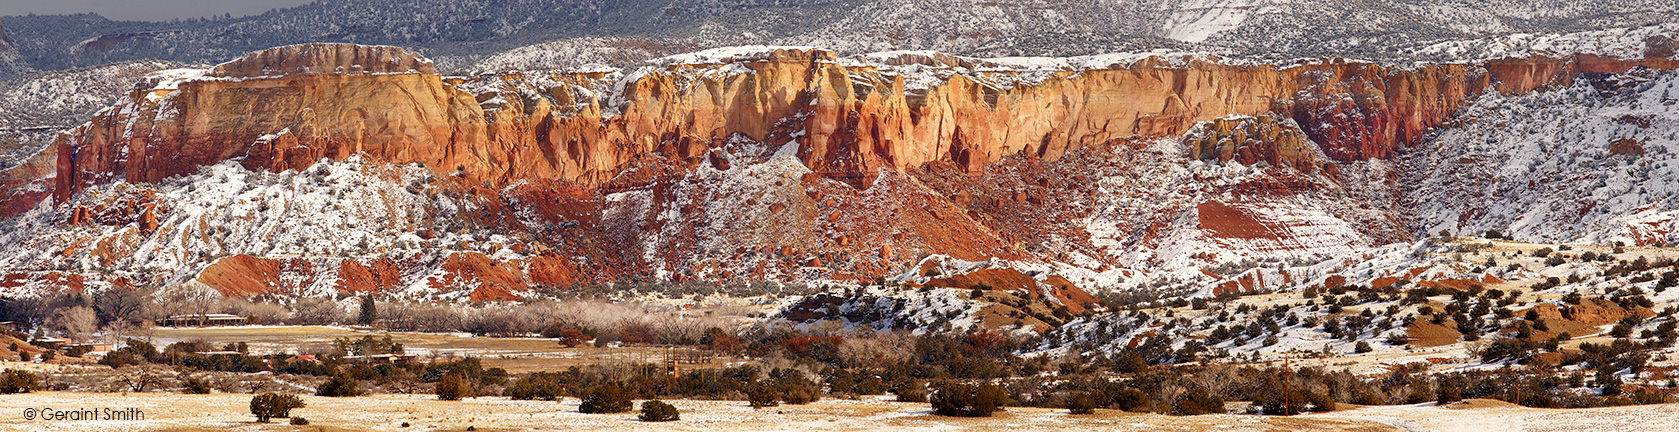 Ghost Ranch, New Mexico abiquiu georgia o'keeffe